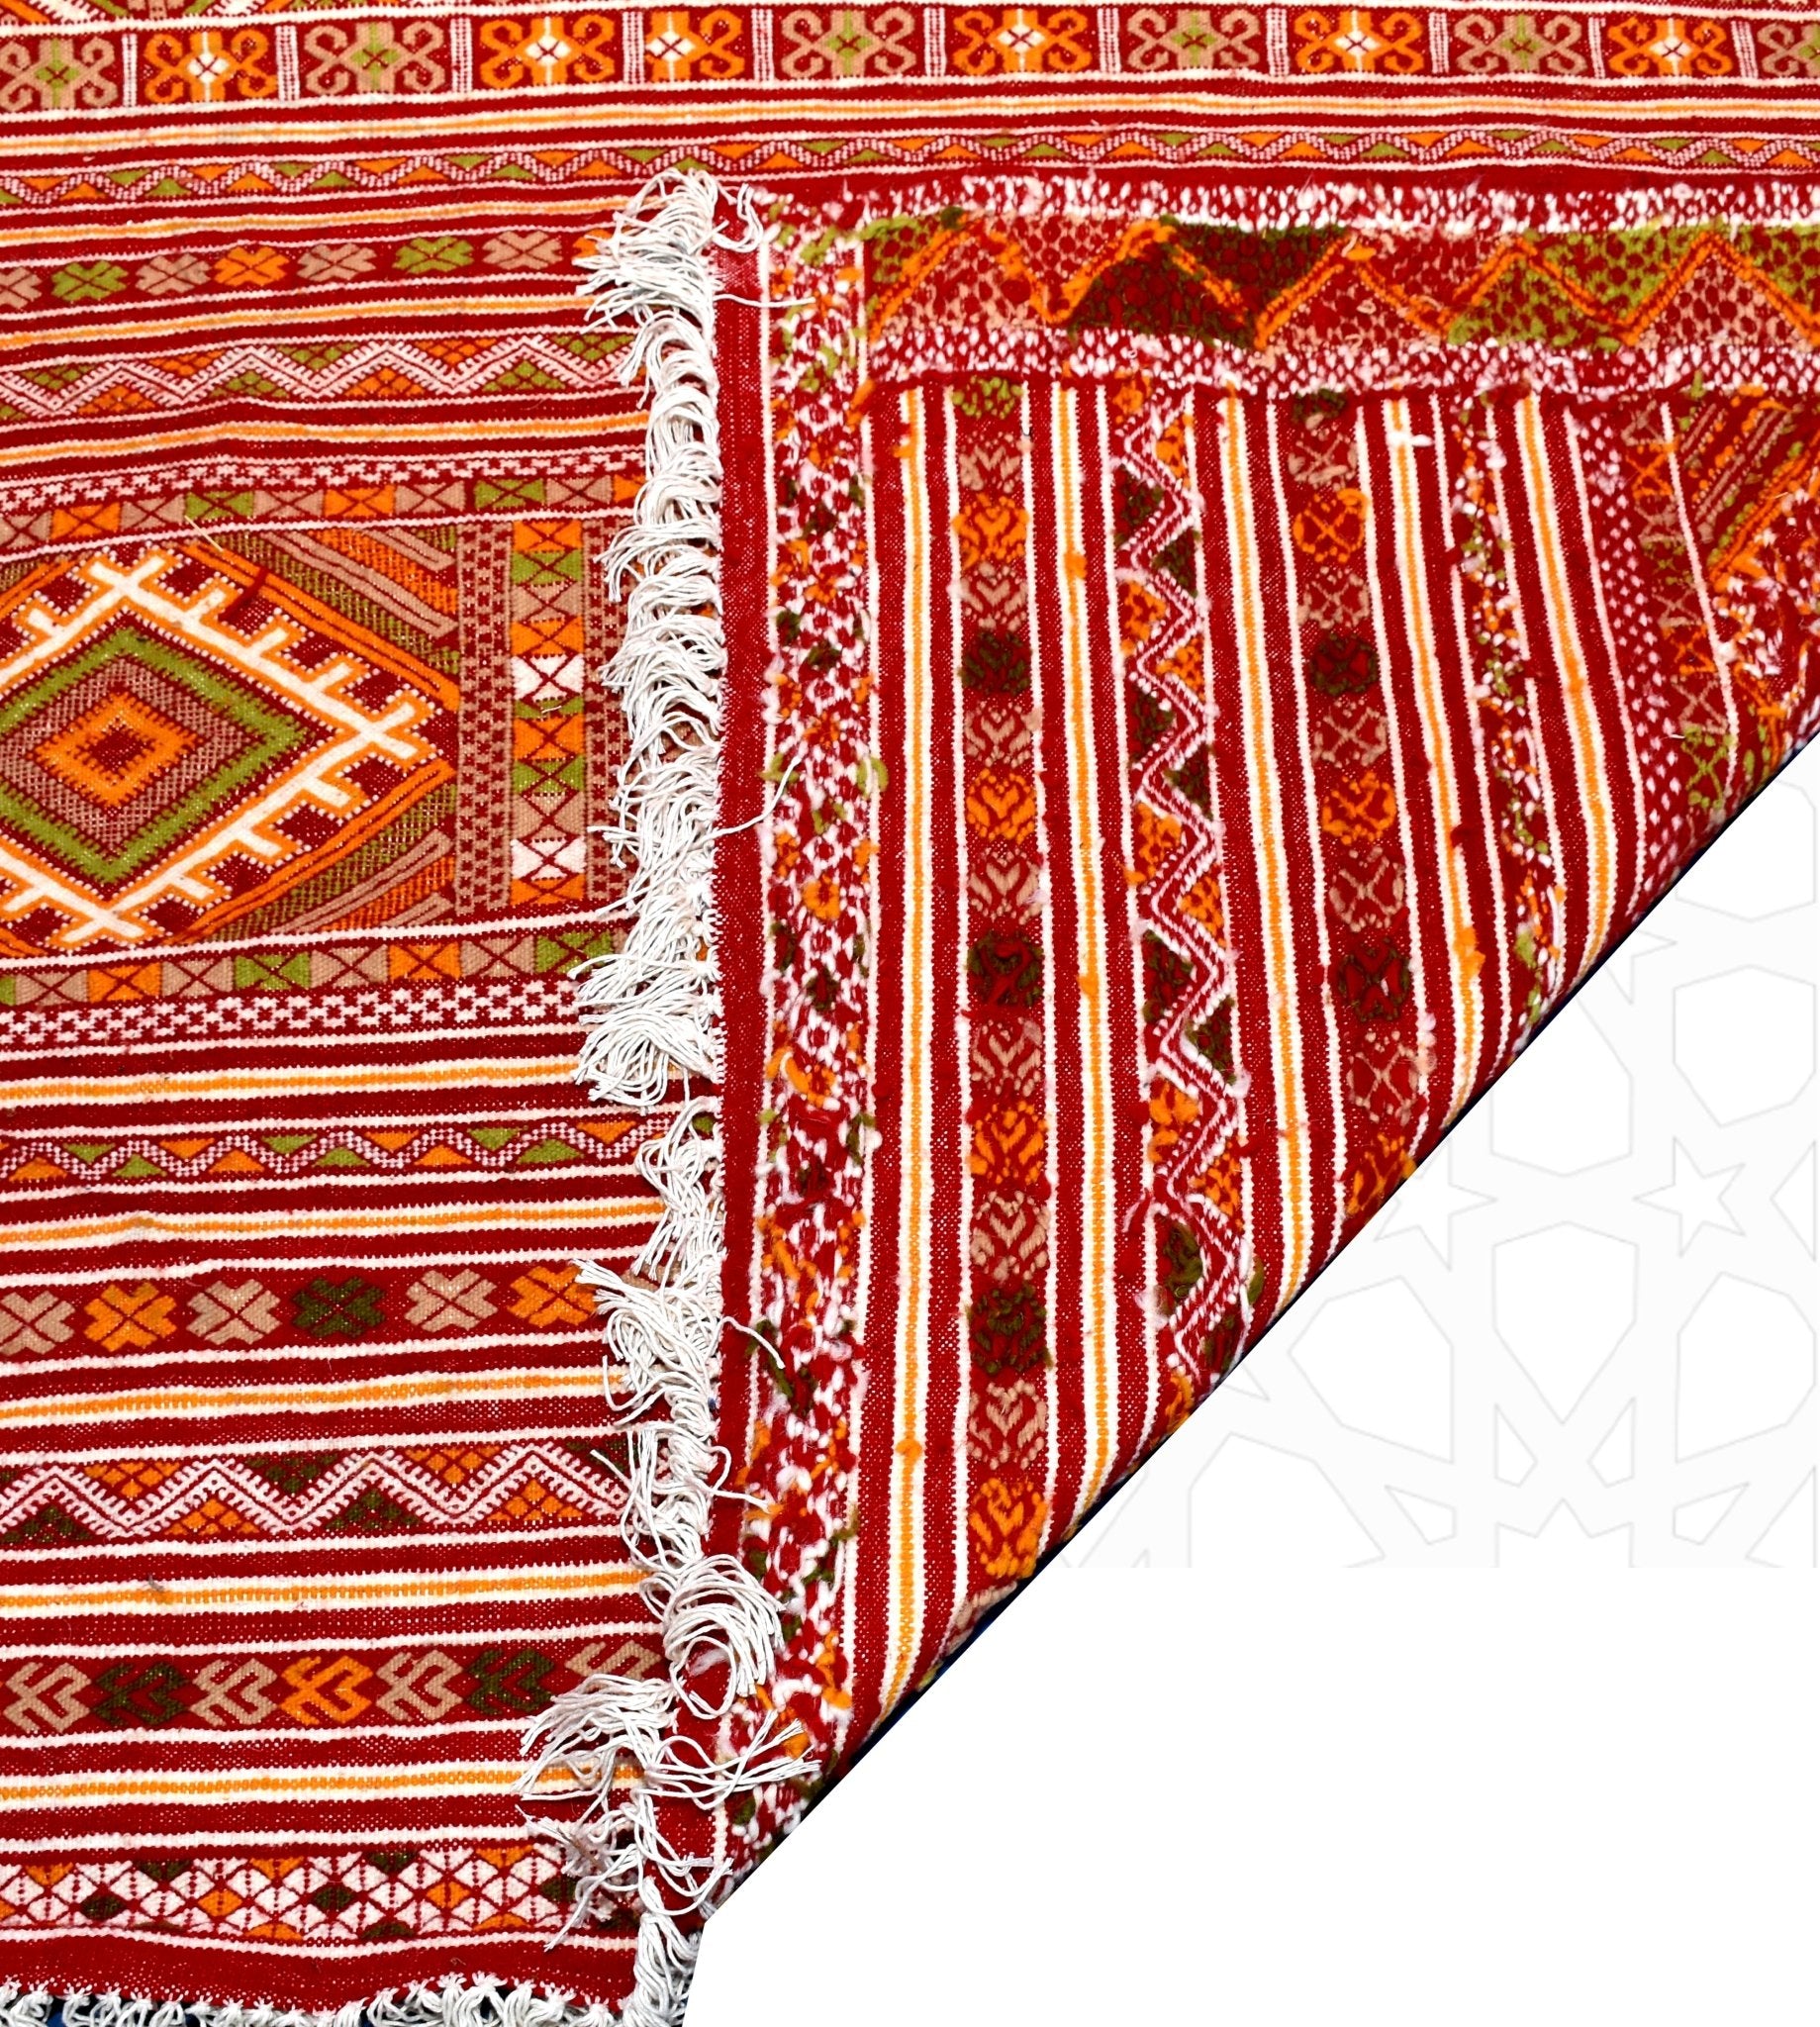 Flatweave kilim hanbal Moroccan rug - 4.27 x 7.55 ft / 130 x 230 cm - Berbers Market